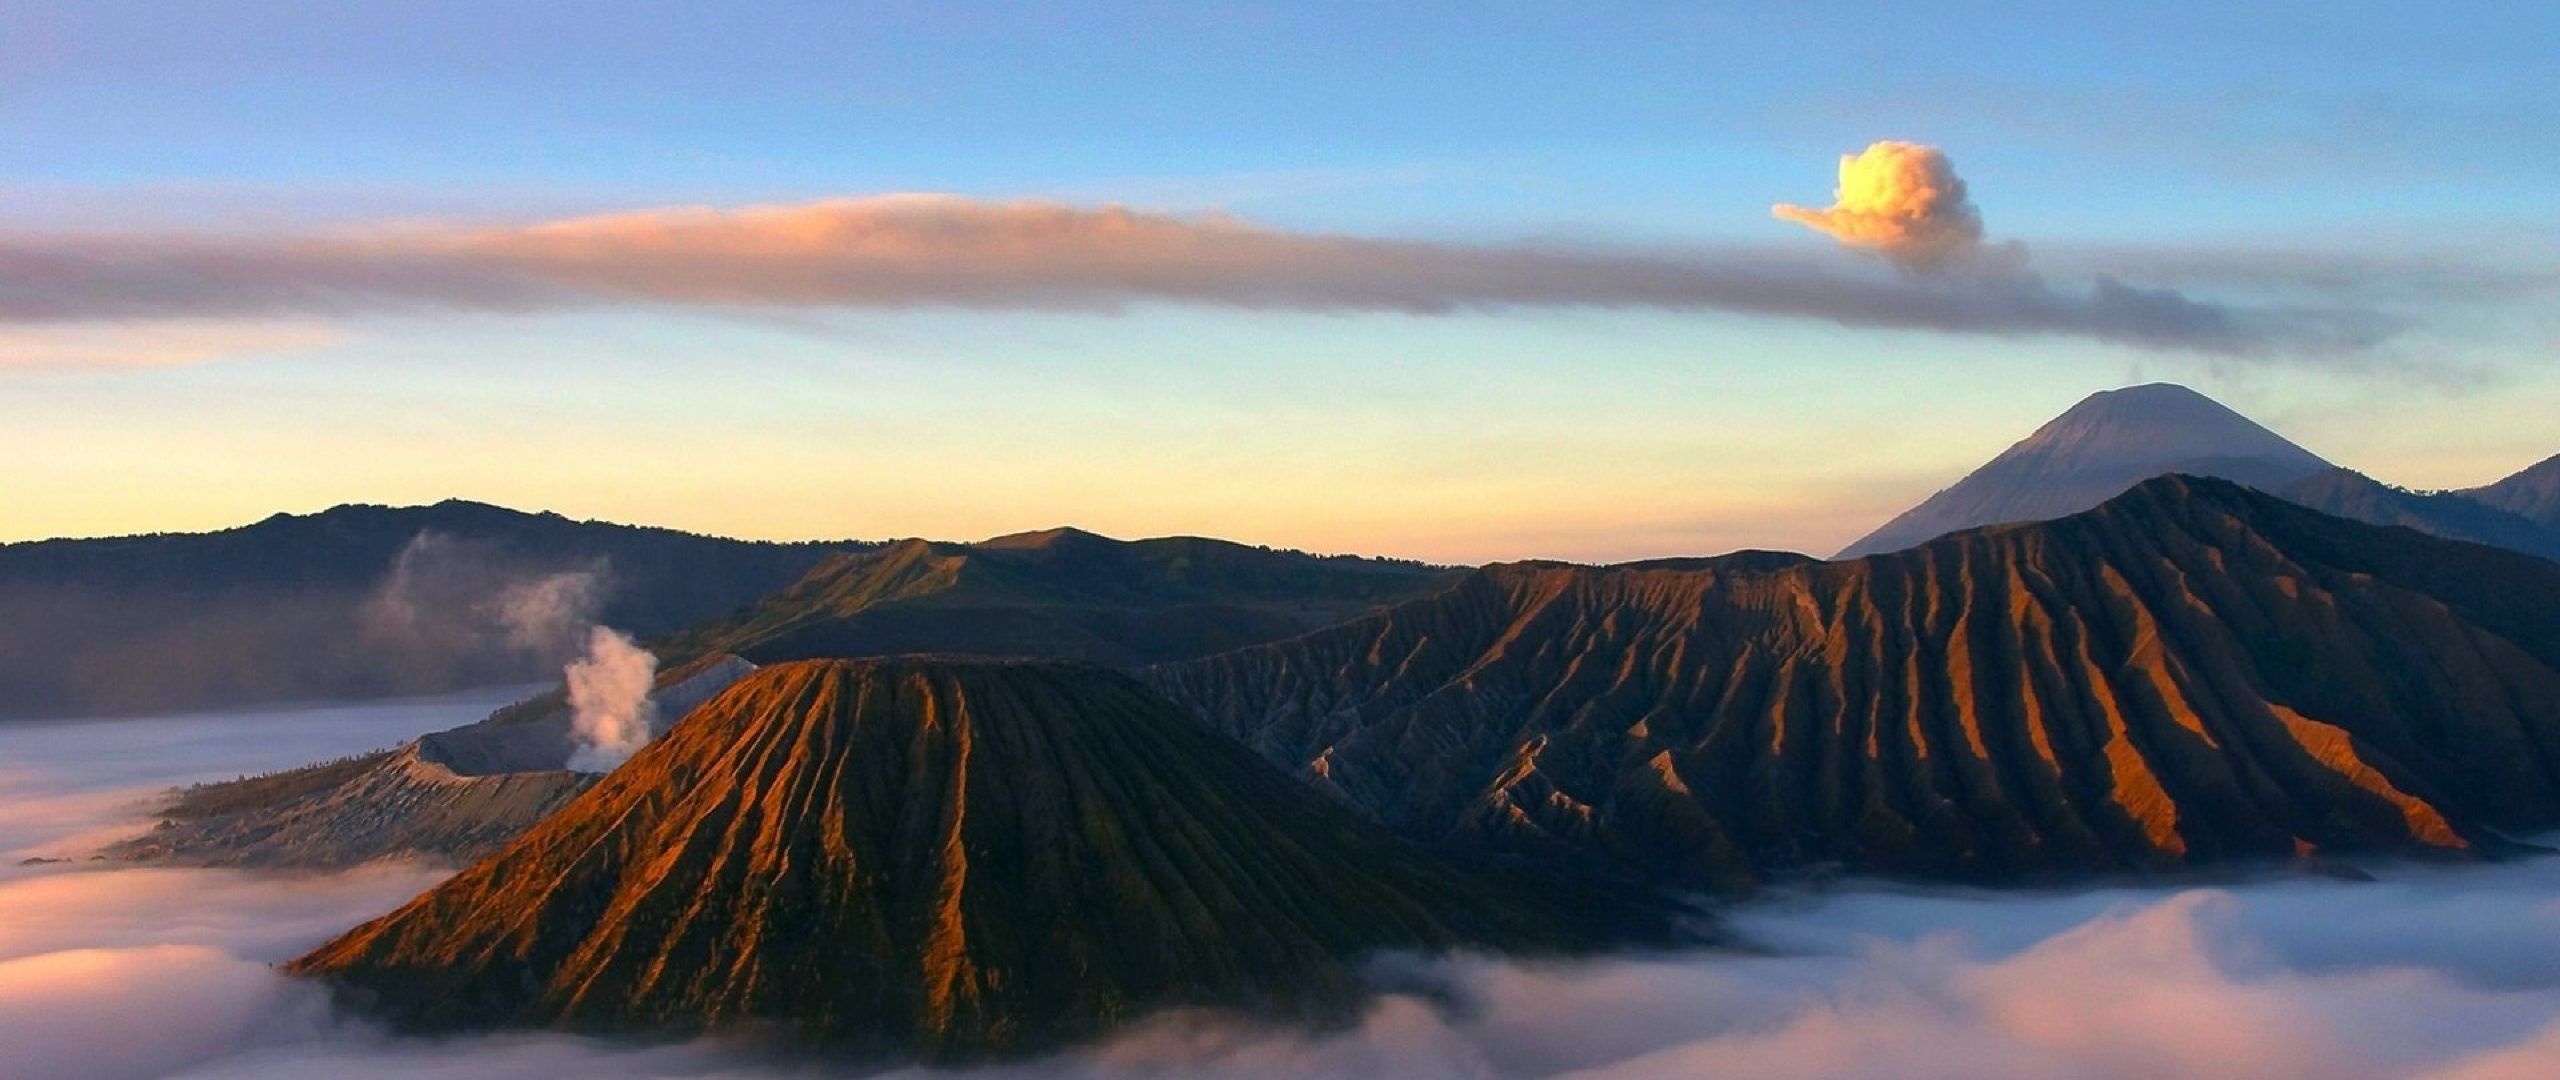 Mount Bromo, Beautiful wallpapers, Indonesian volcano, Landscapewallpaper, 2560x1080 Dual Screen Desktop